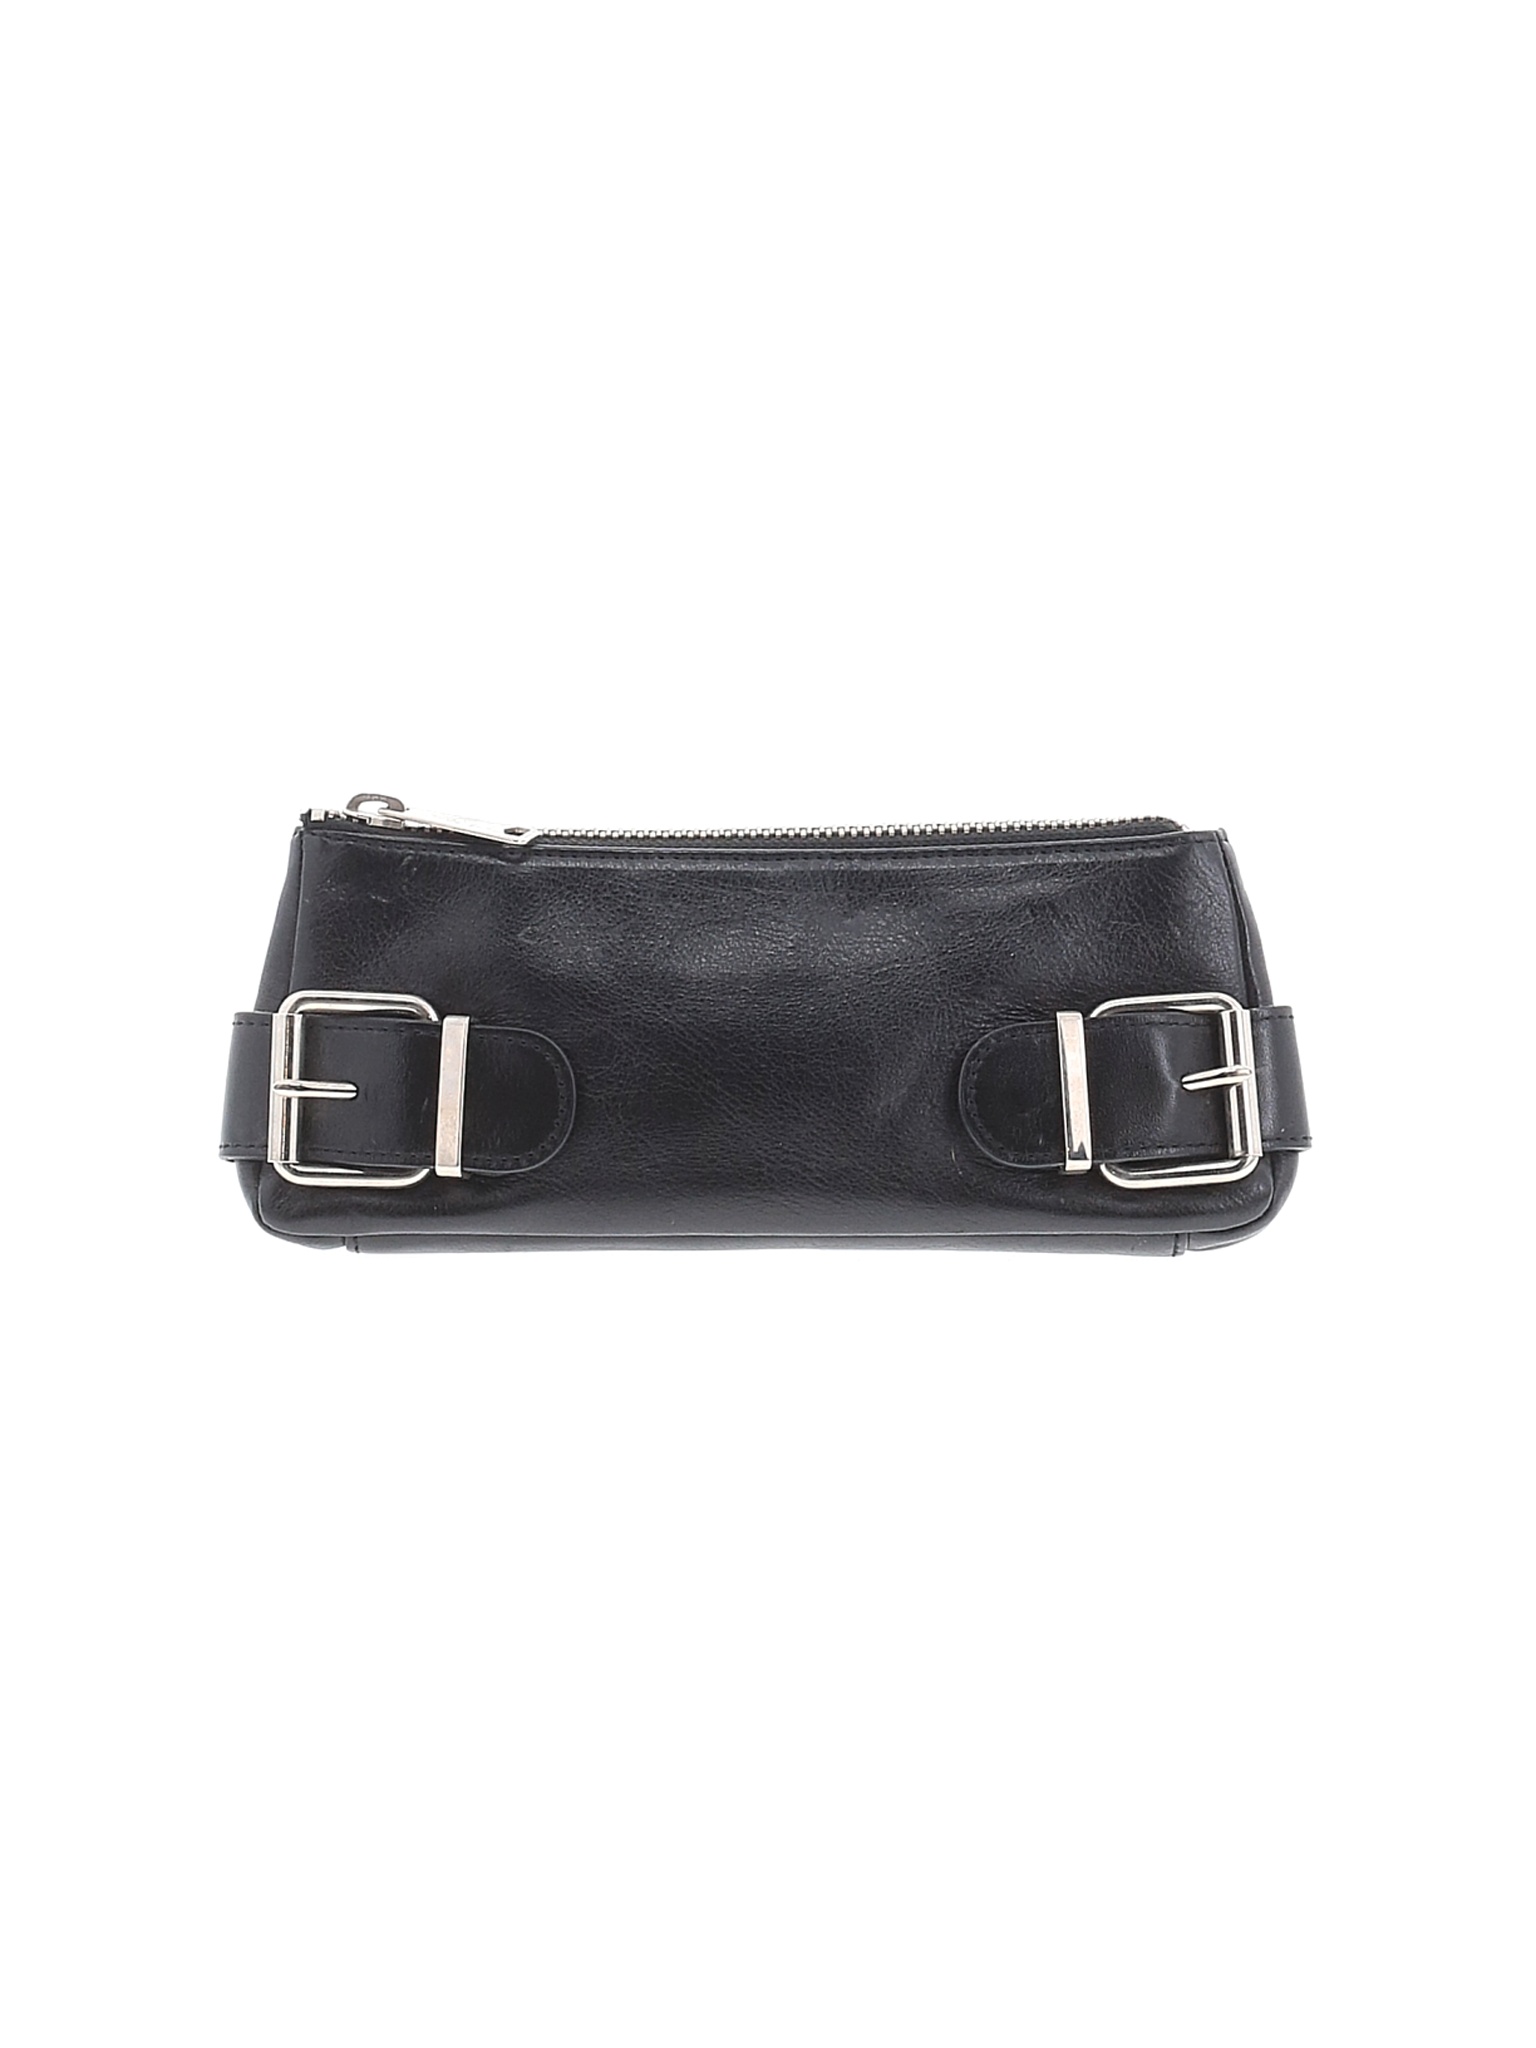 Banana Republic Women Black Leather Wallet One Size | eBay